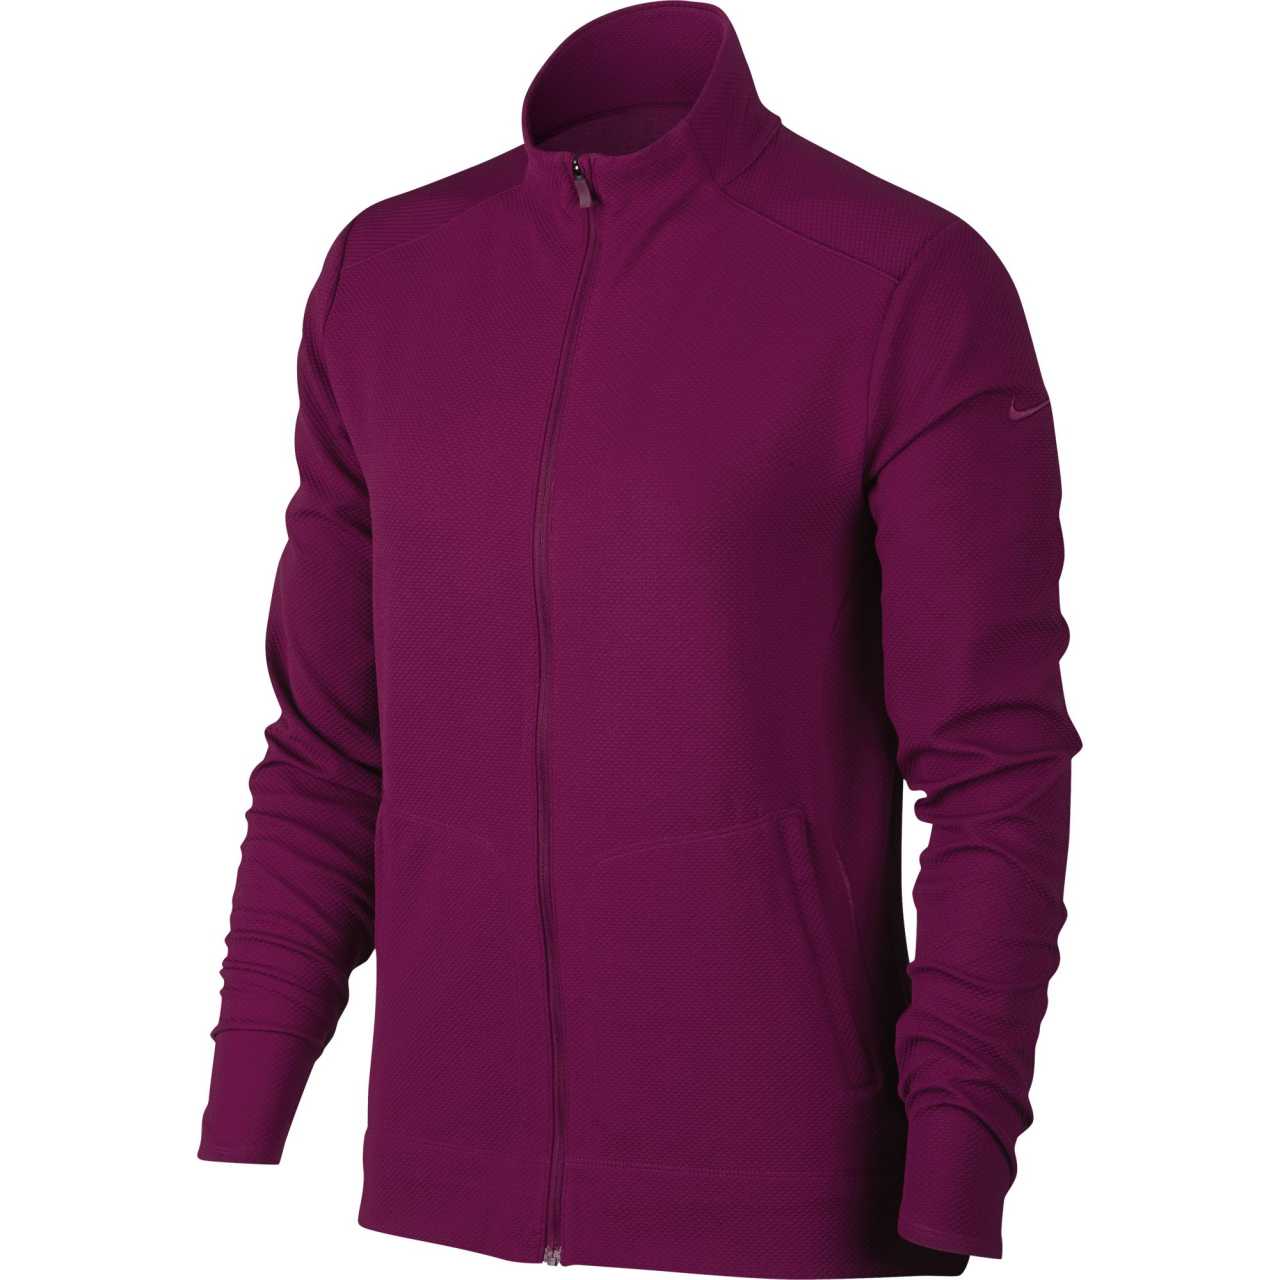 Nike Dry-Fit Golf Jacke Damen violett